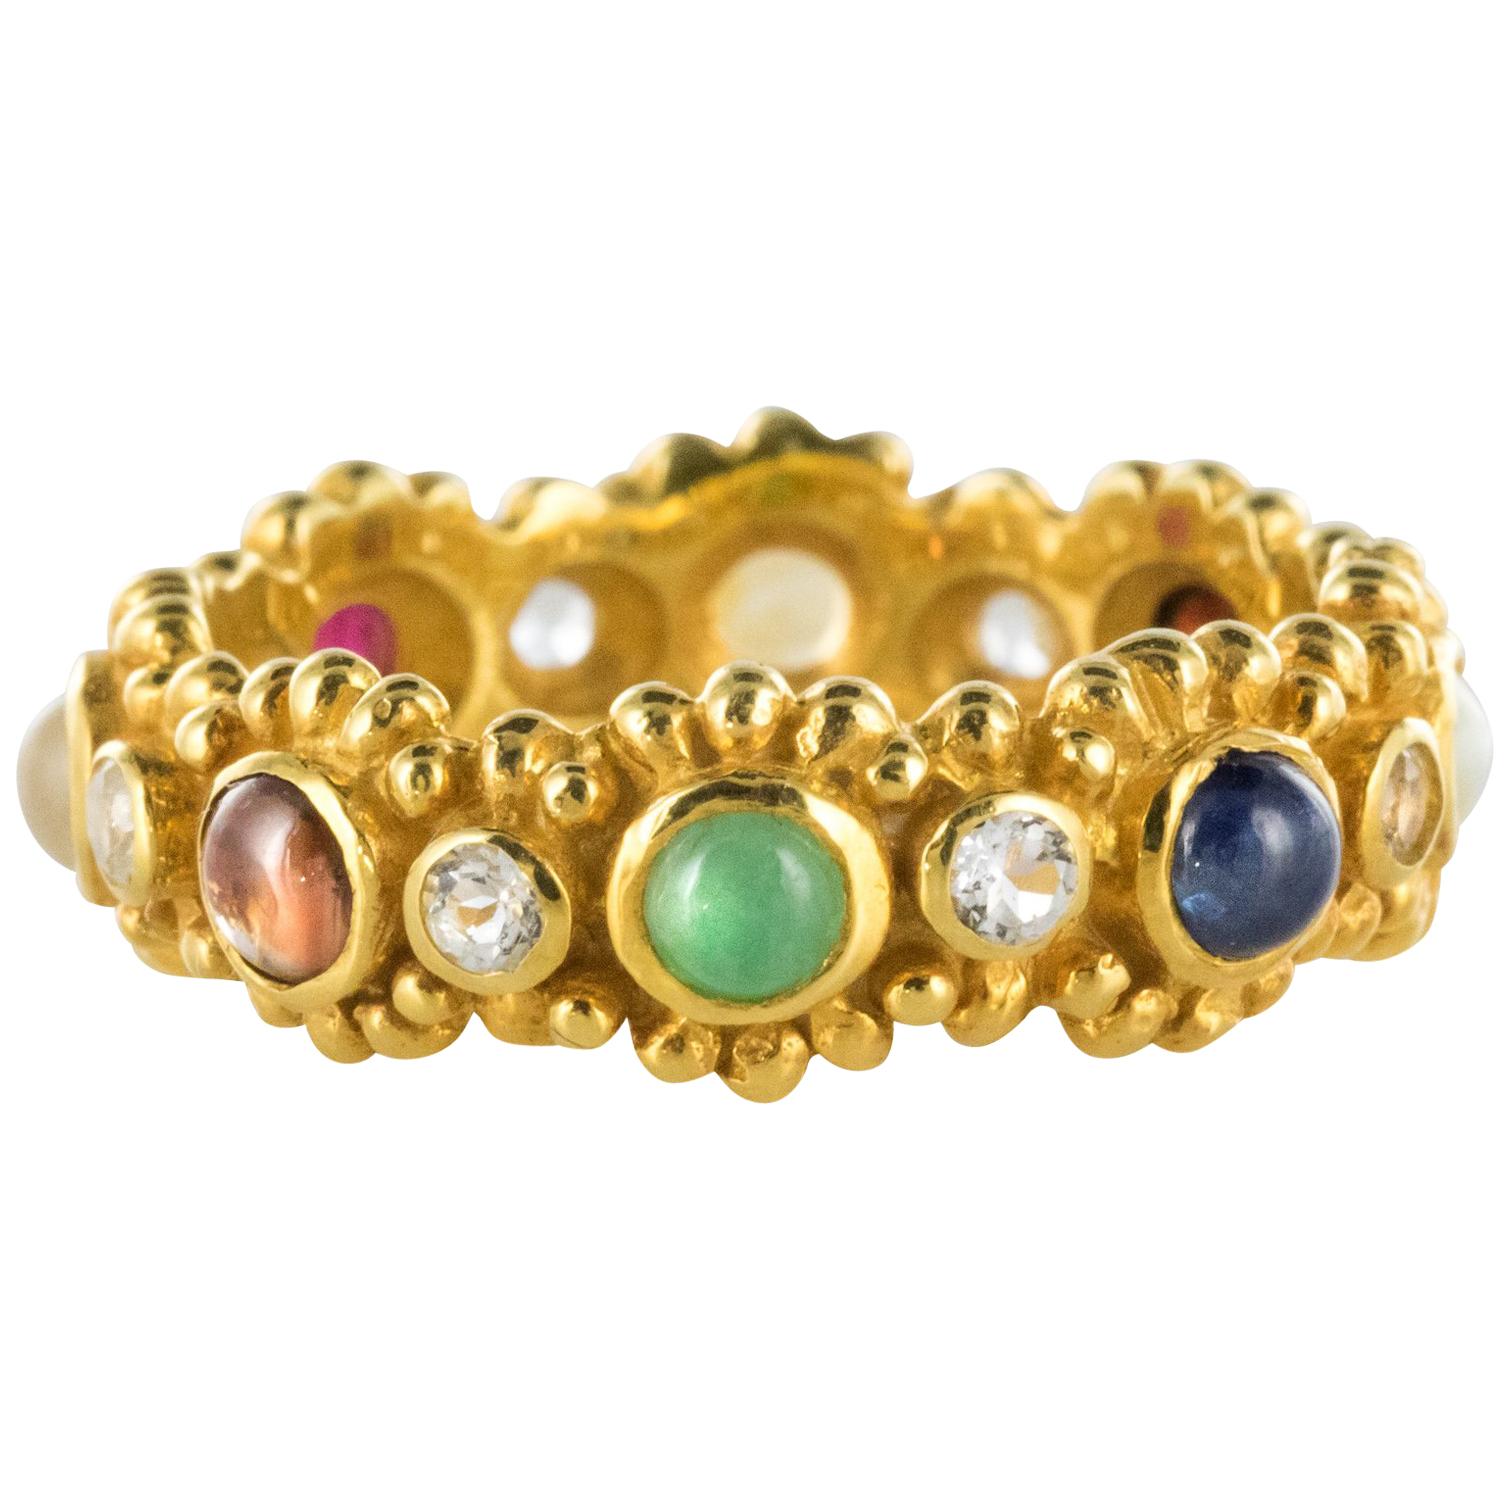 New Precious Stones Golden Vermeil Band Ring